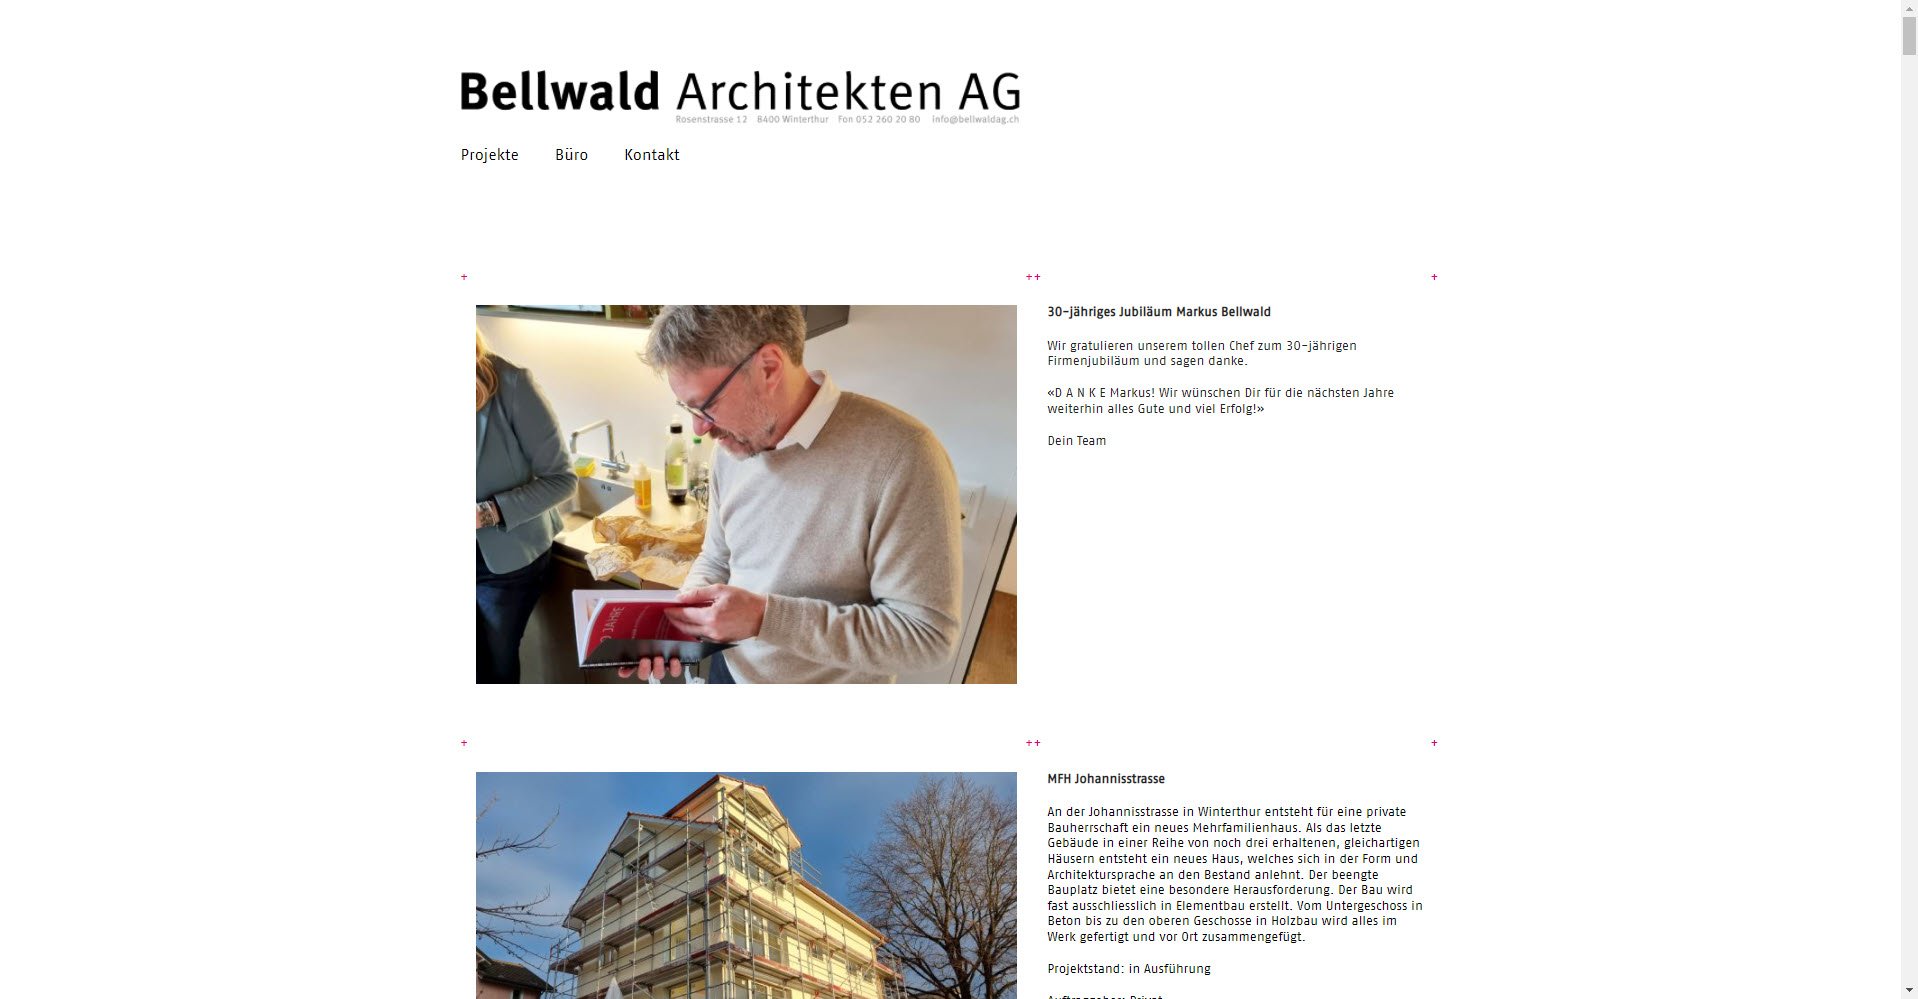 Bellwald Architekten AG